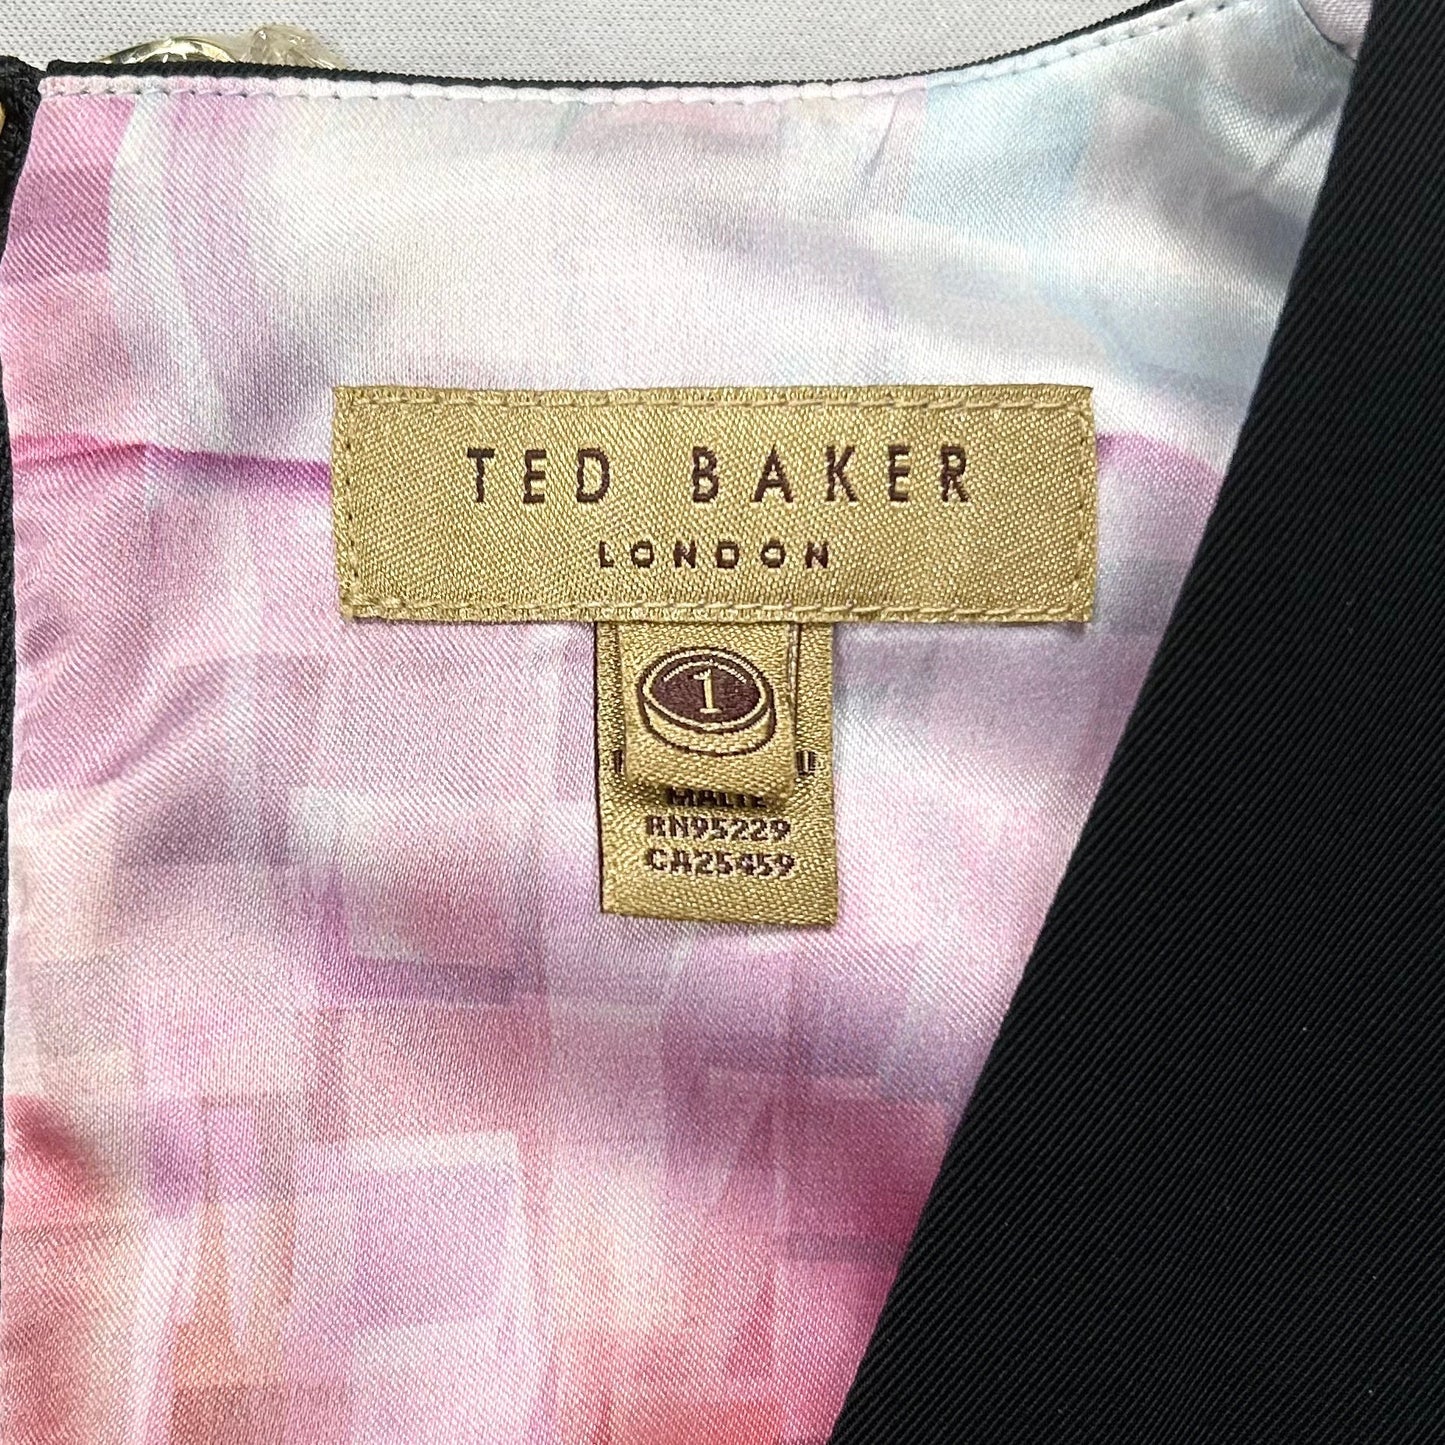 Dress Designer By Ted Baker  Size: S